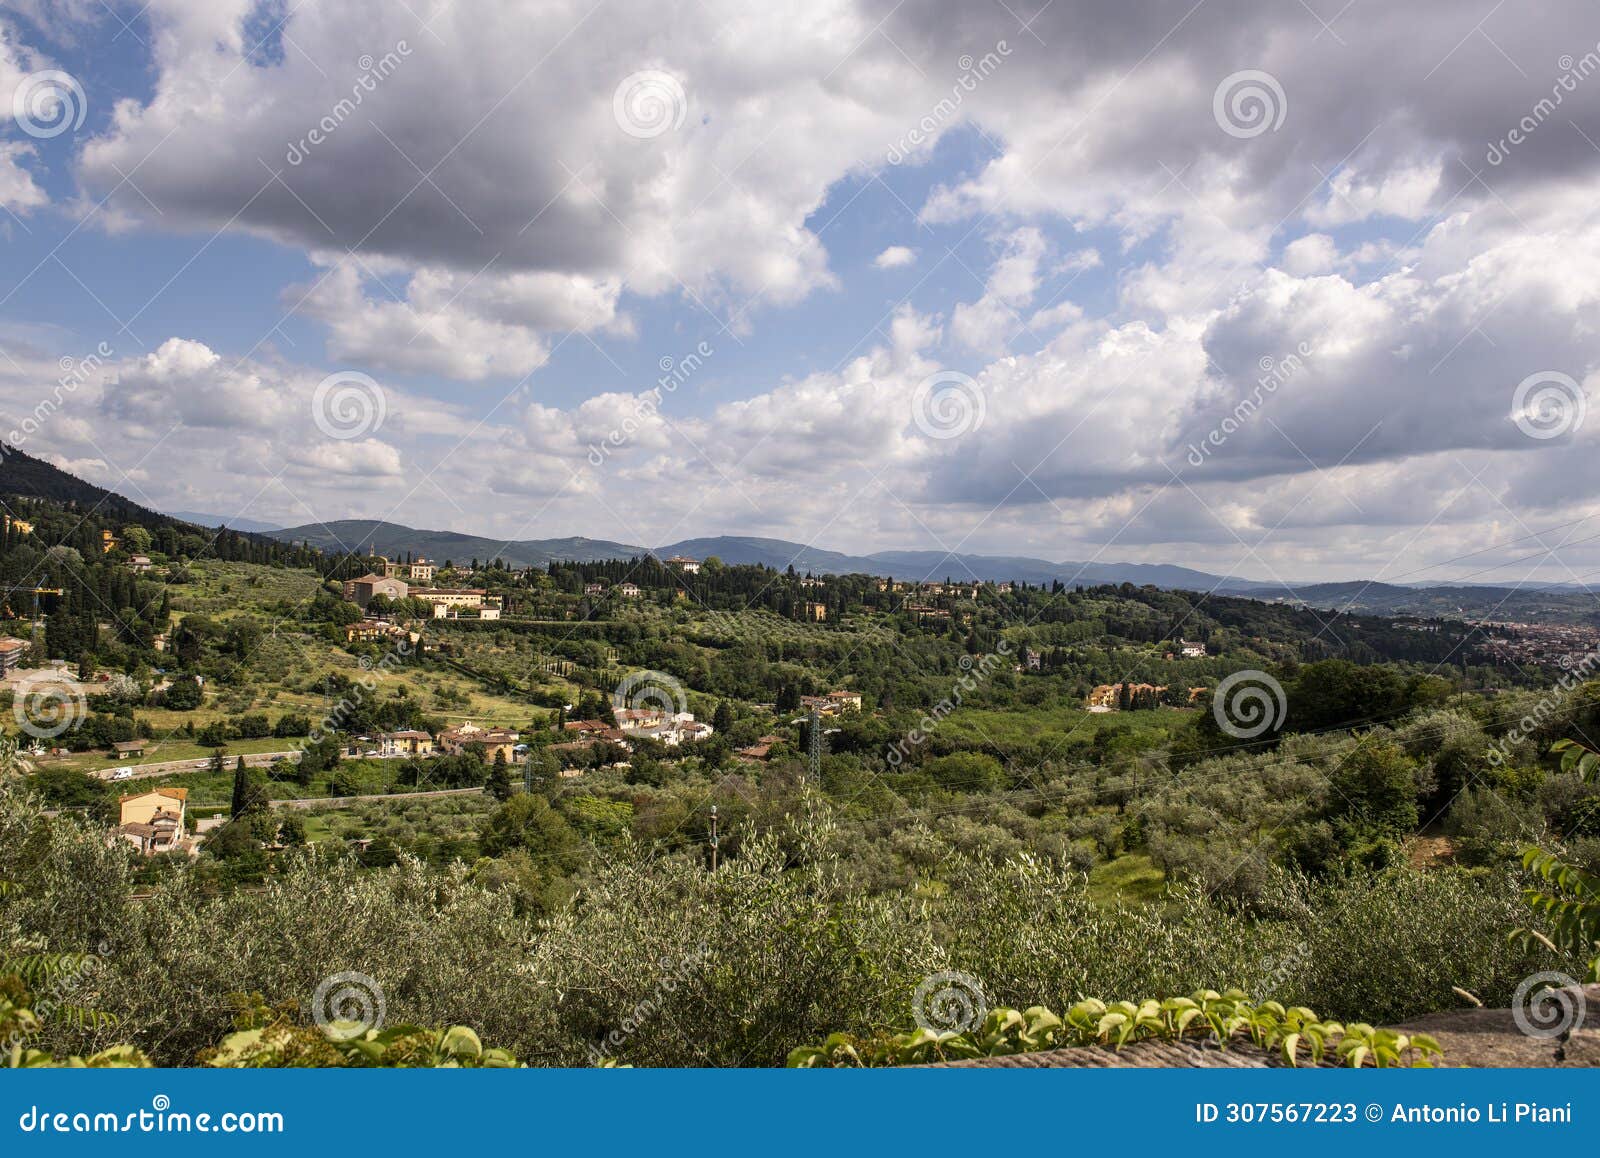 beautiful panorama of mugello in tuscany